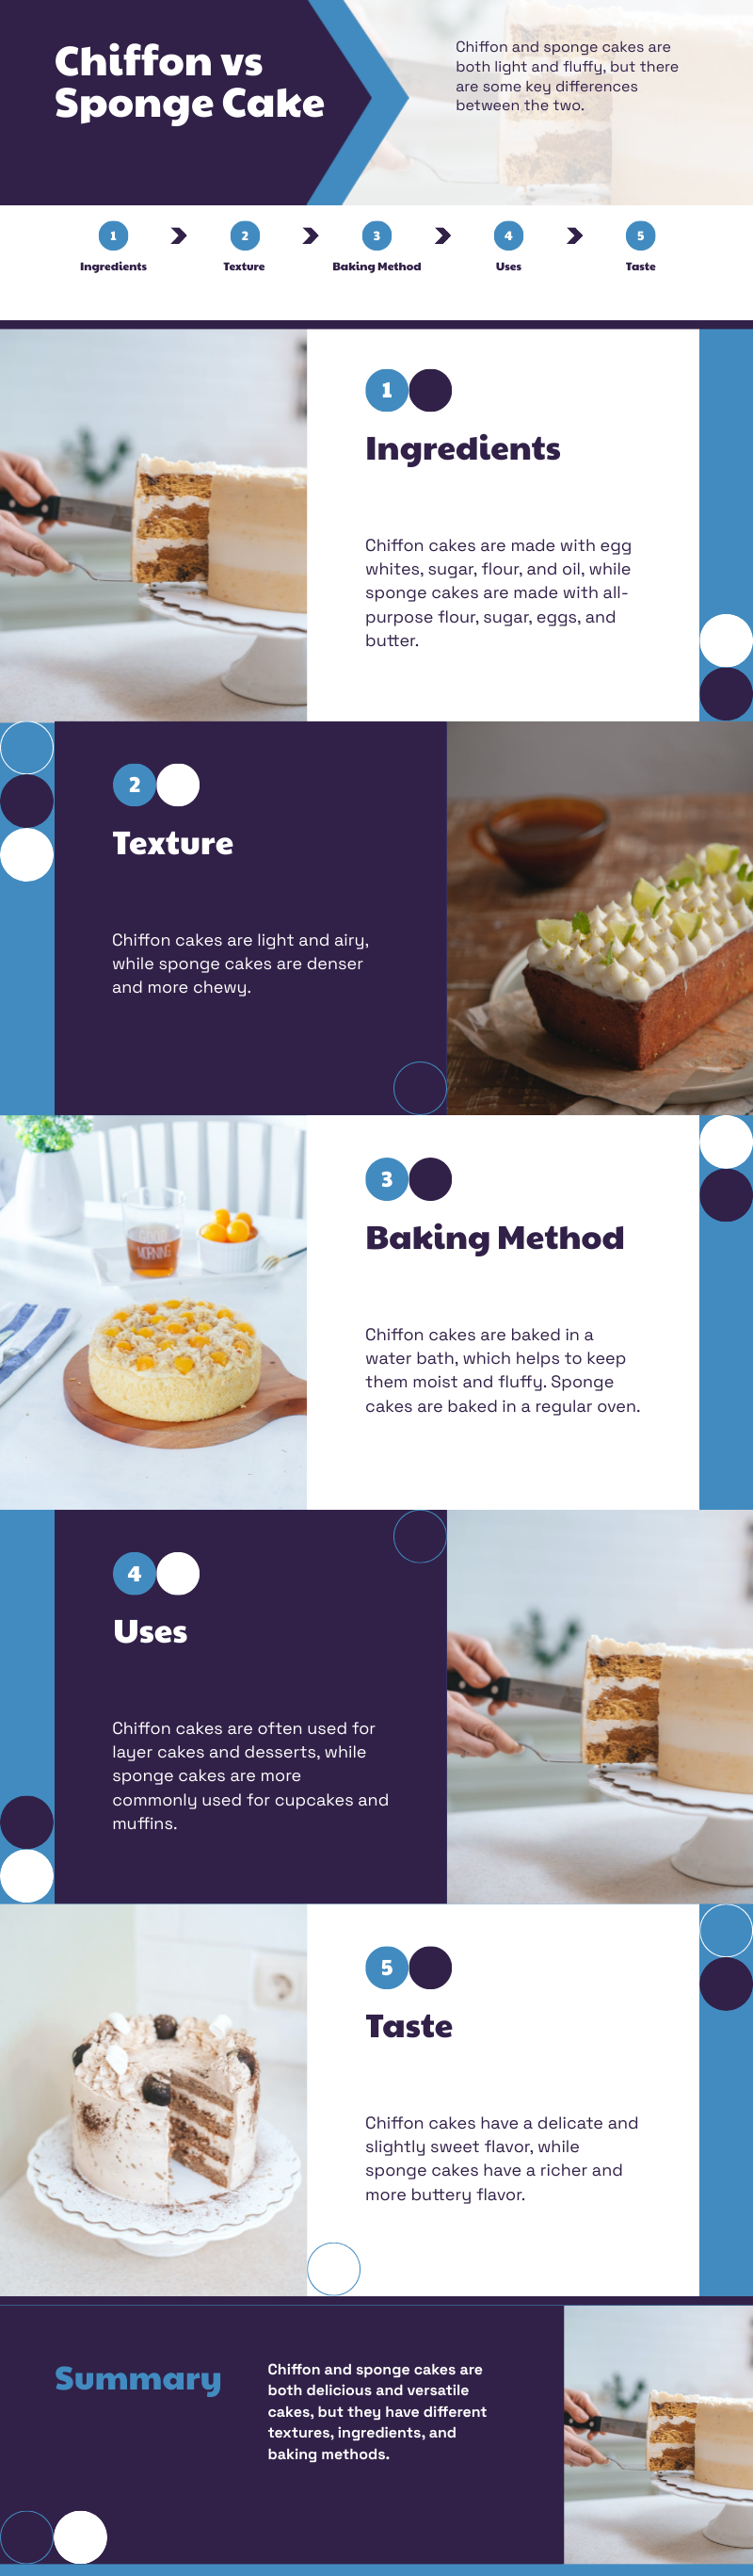 infographic for chiffon cake vs sponge cake 